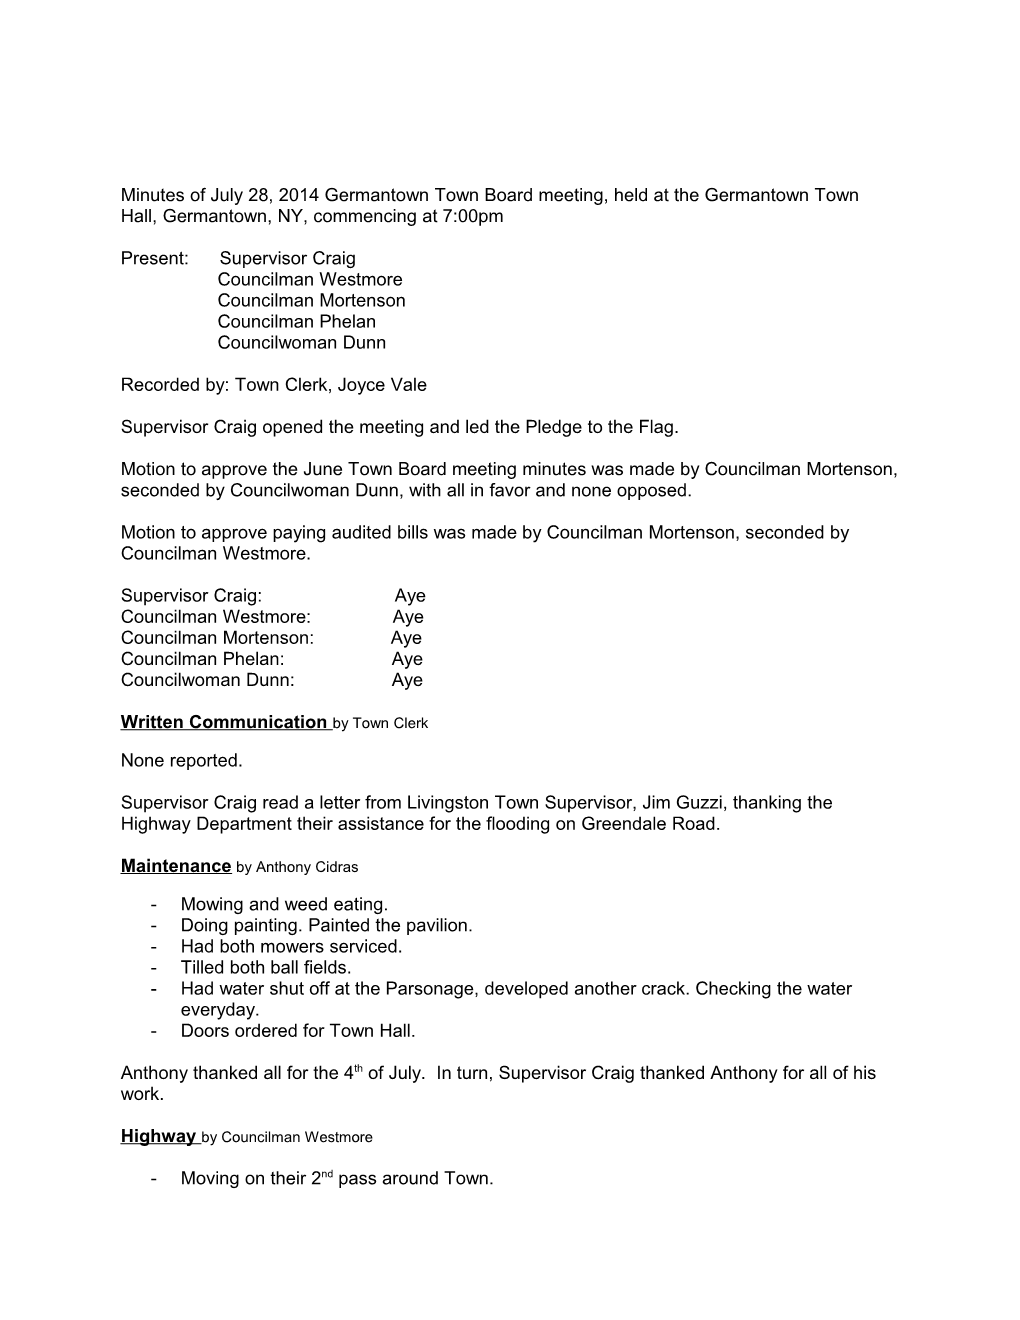 Minutes of July 28, 2014 Germantown Town Board Meeting, Held at the Germantown Town Hall